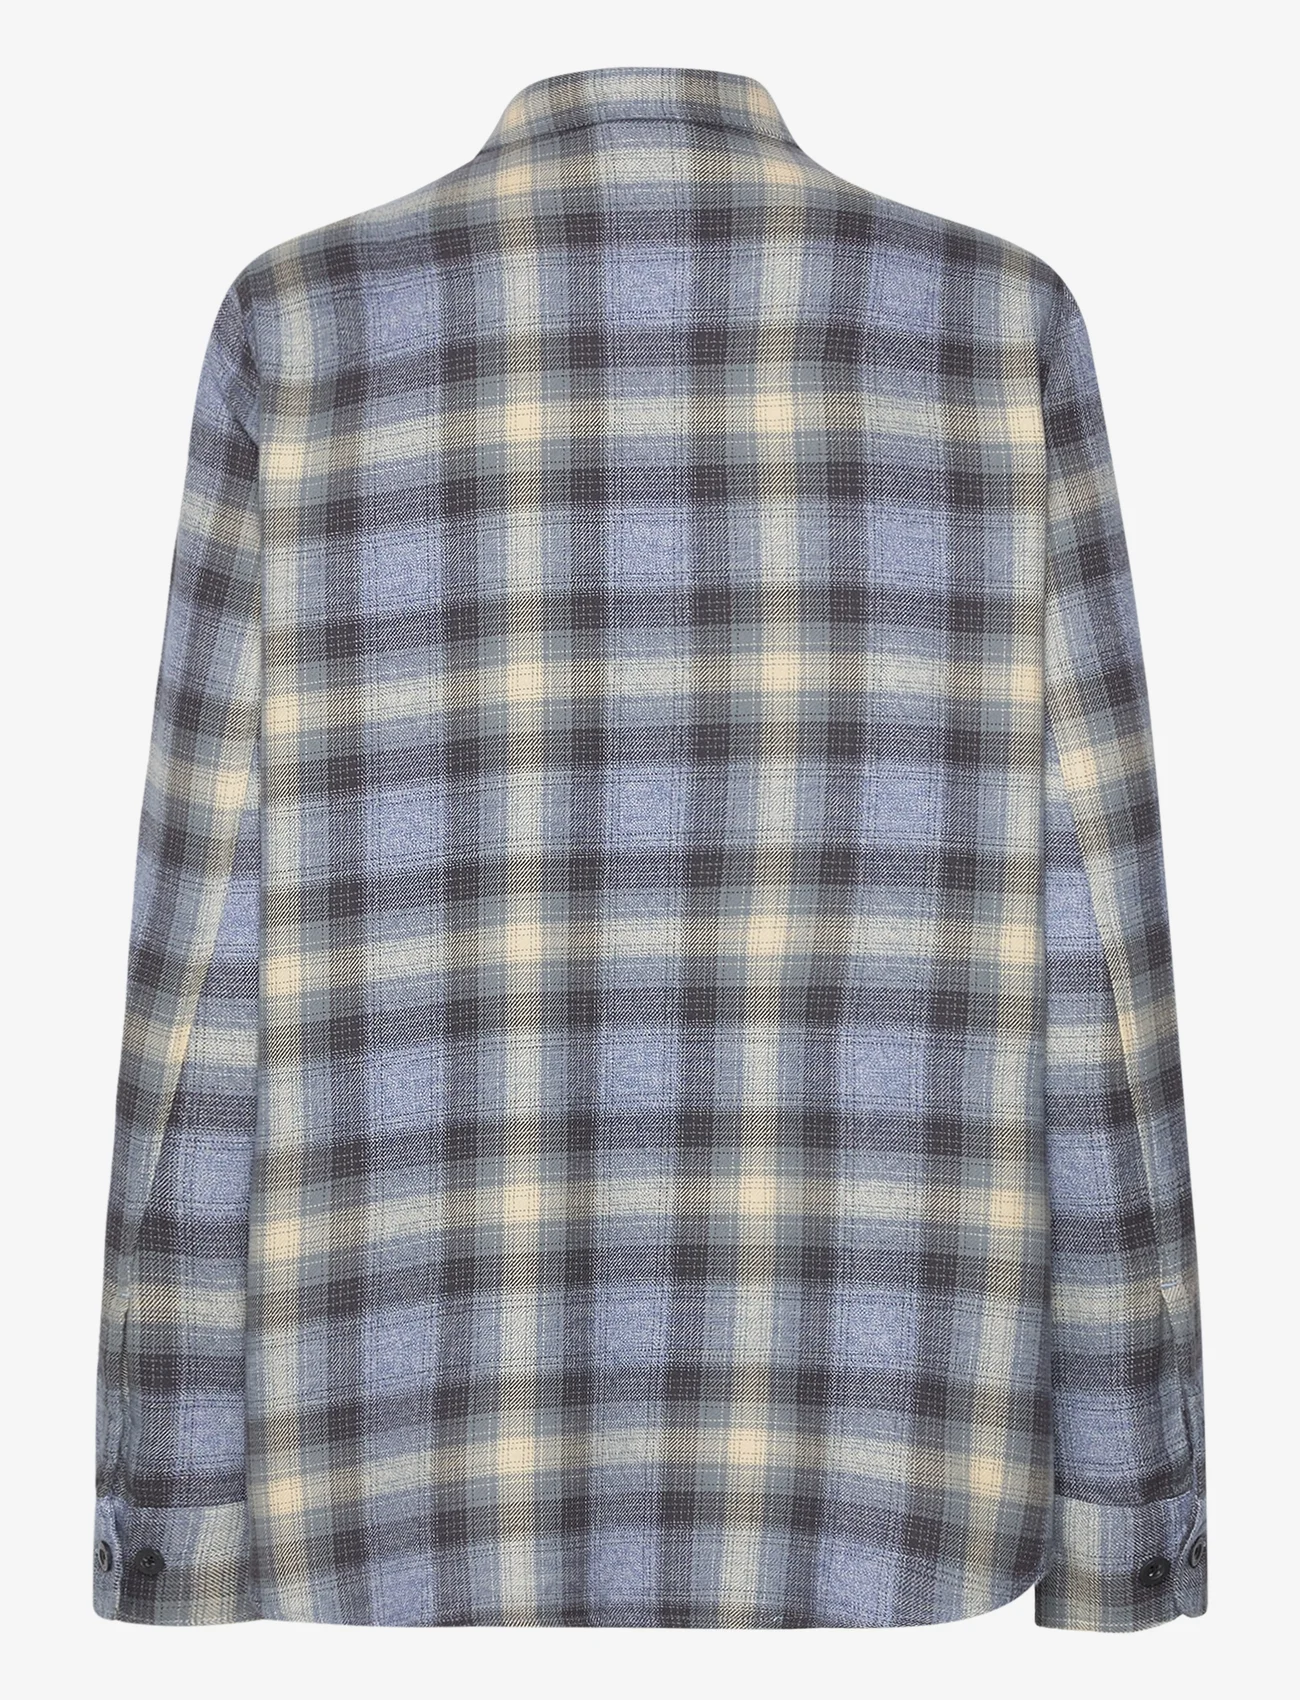 Peak Performance - W Cotton Flannel Shirt-142 CHECK - marškiniai ilgomis rankovėmis - 142 check - 1